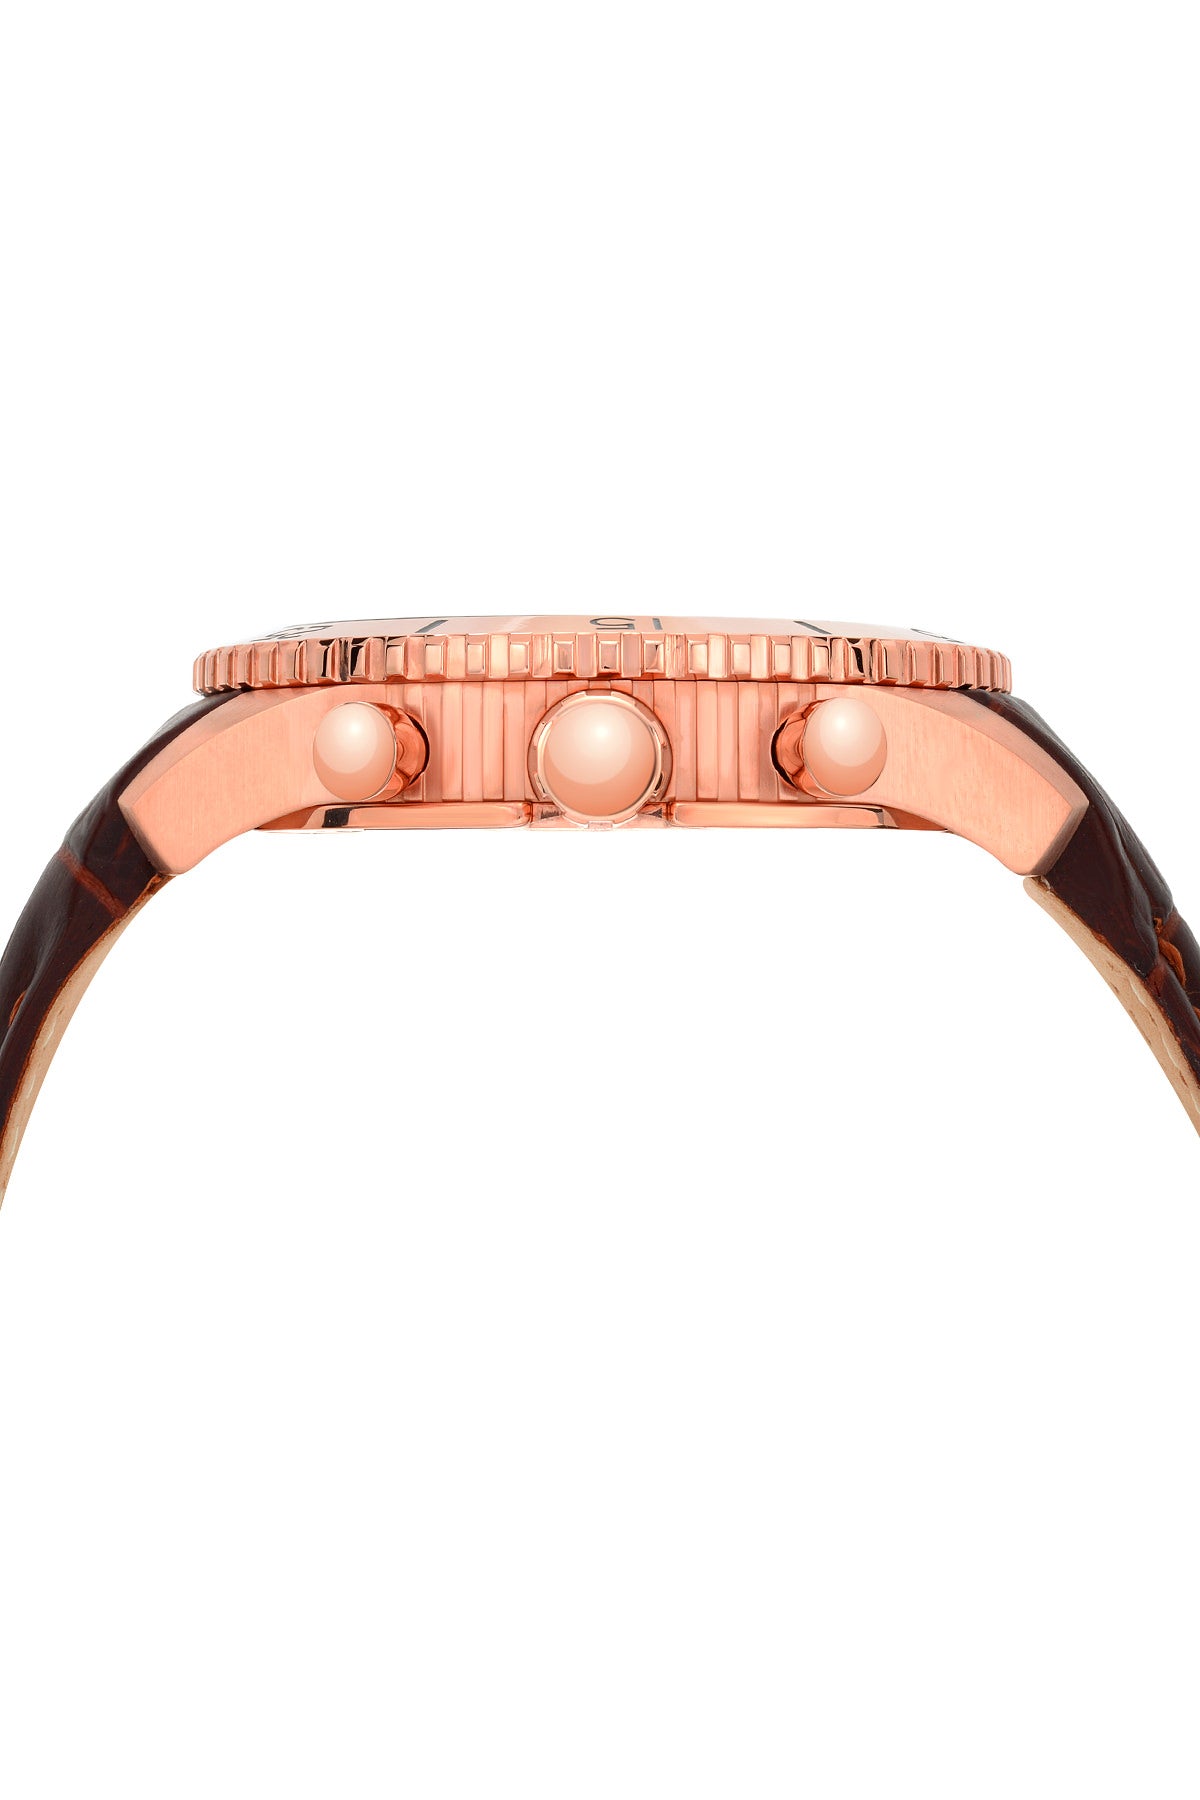 Porsamo Bleu Tristan luxury chronograph men's watch, genuine leather band, rose, brown 592BTRL